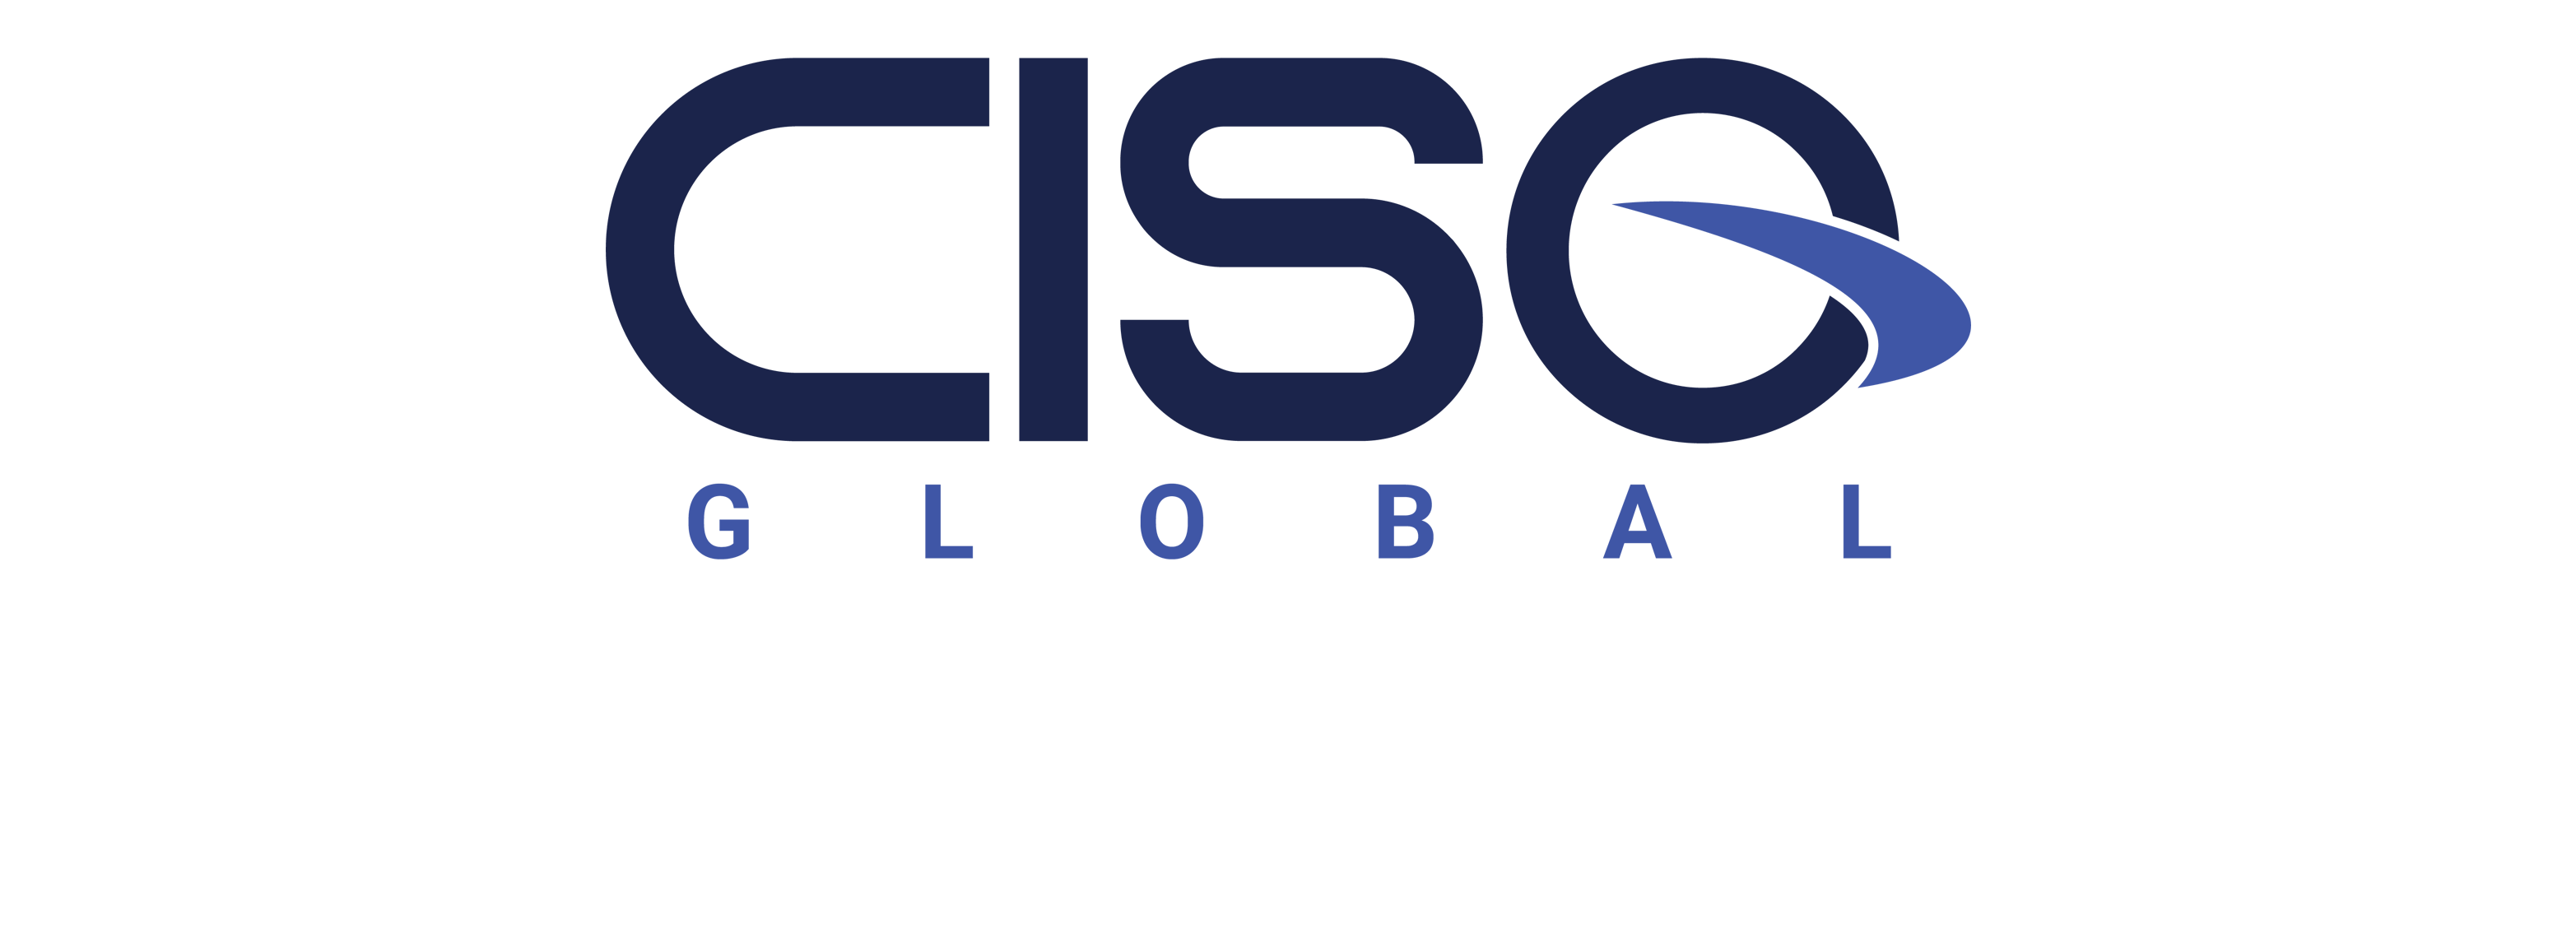 CISO logo 2-color (11).png